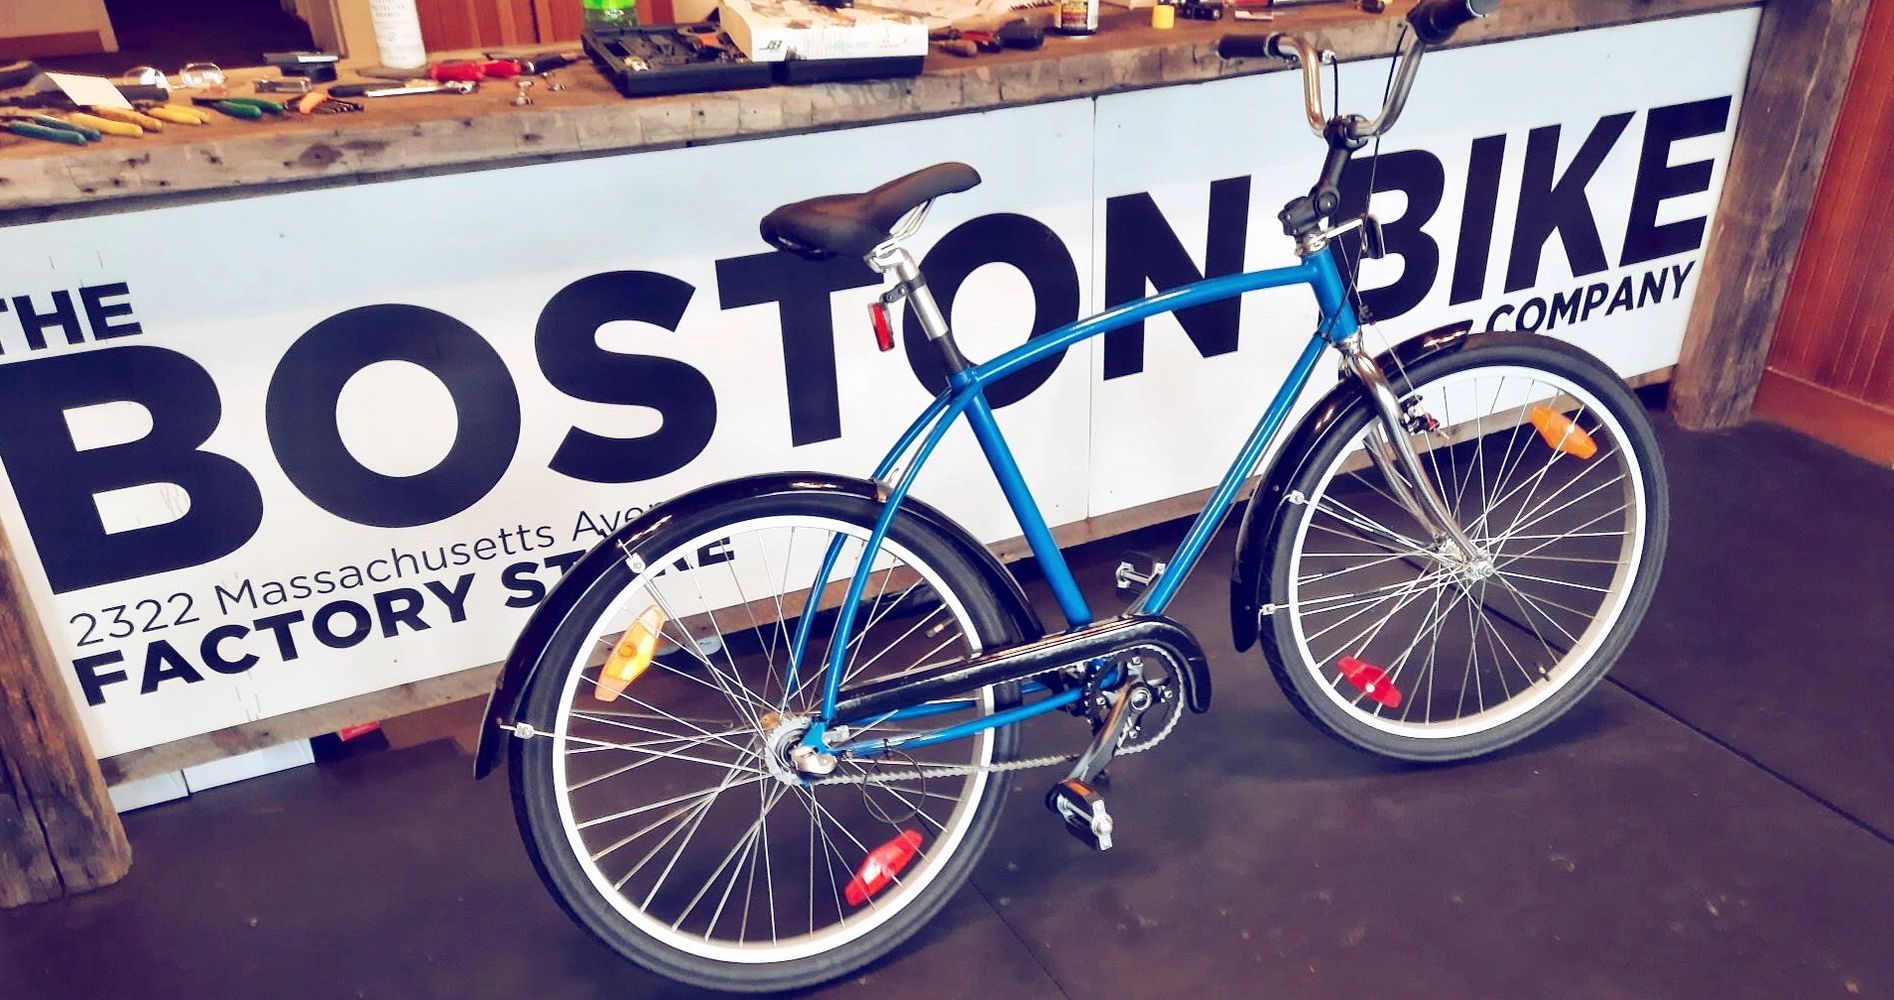 Bike Shop - The Boston Bike Company